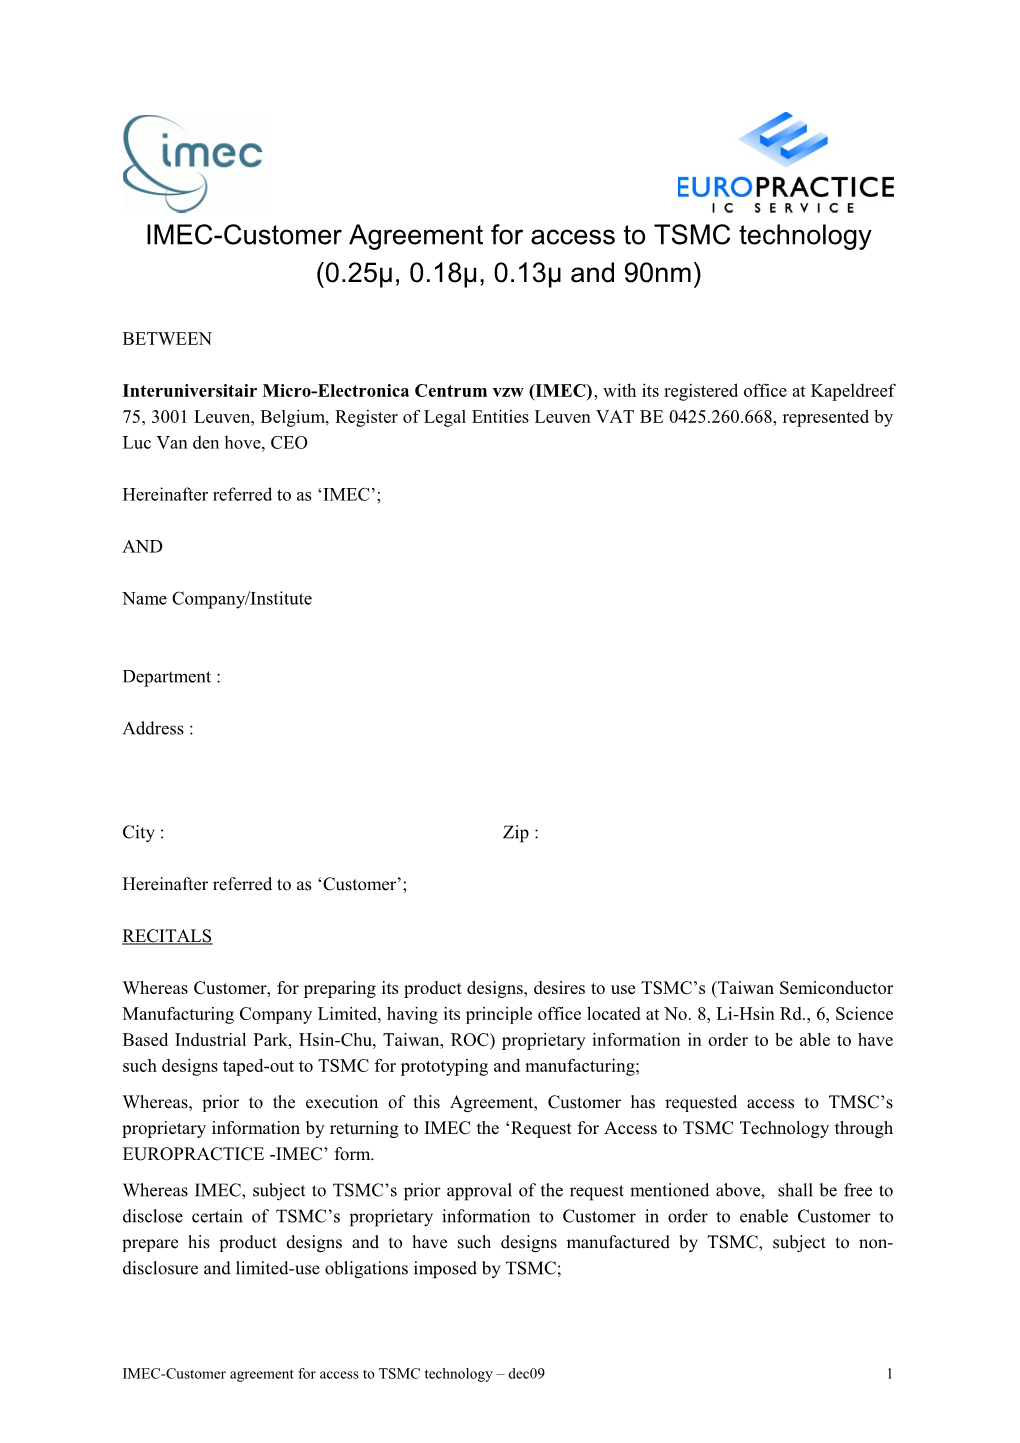 IMEC-Customer Agreement for Access to TSMC Technology